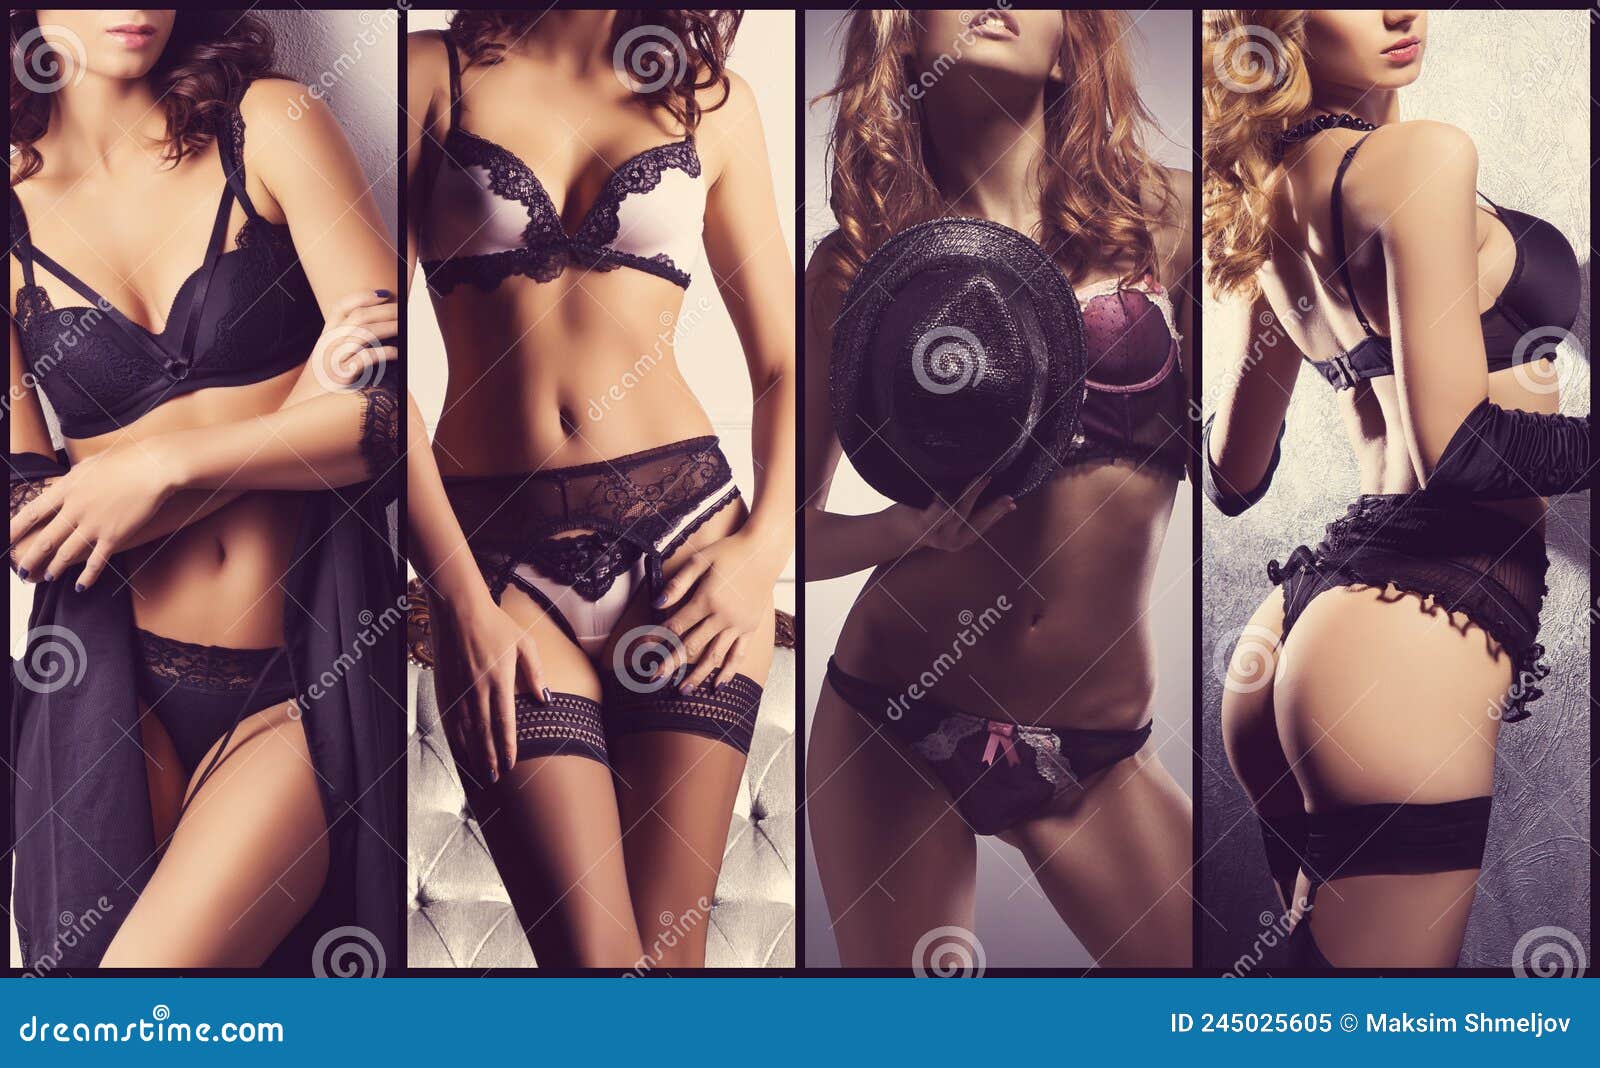 Chicas Sexys En Lencería Erótica. Collage De Colección De Ropa Interior. Imagen de - Imagen de morena: 245025605